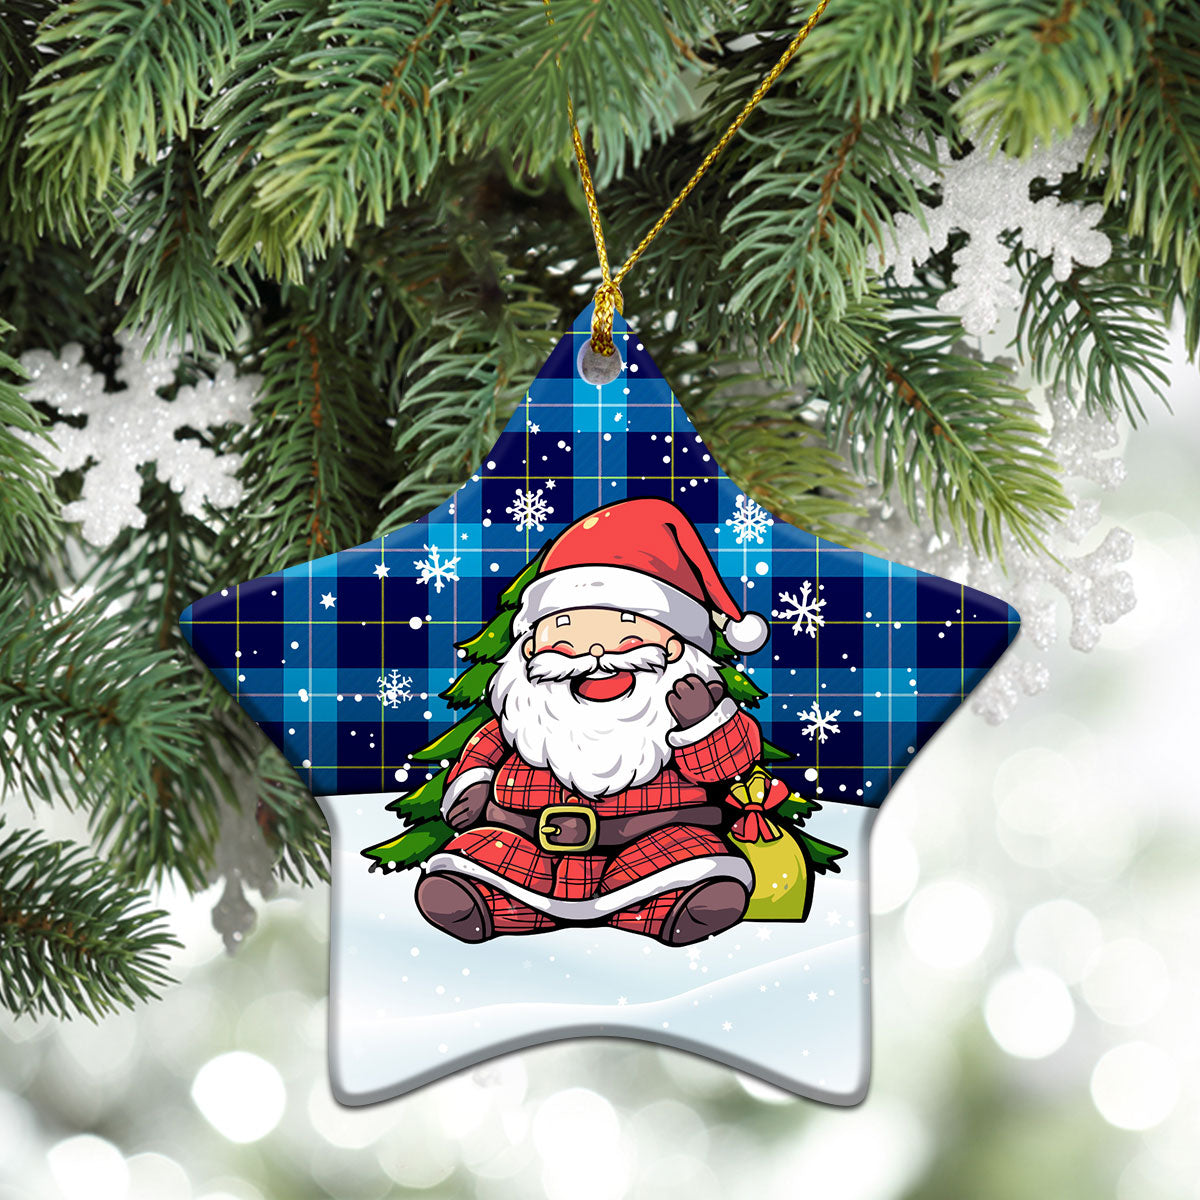 McKerrell Tartan Christmas Ceramic Ornament - Scottish Santa Style